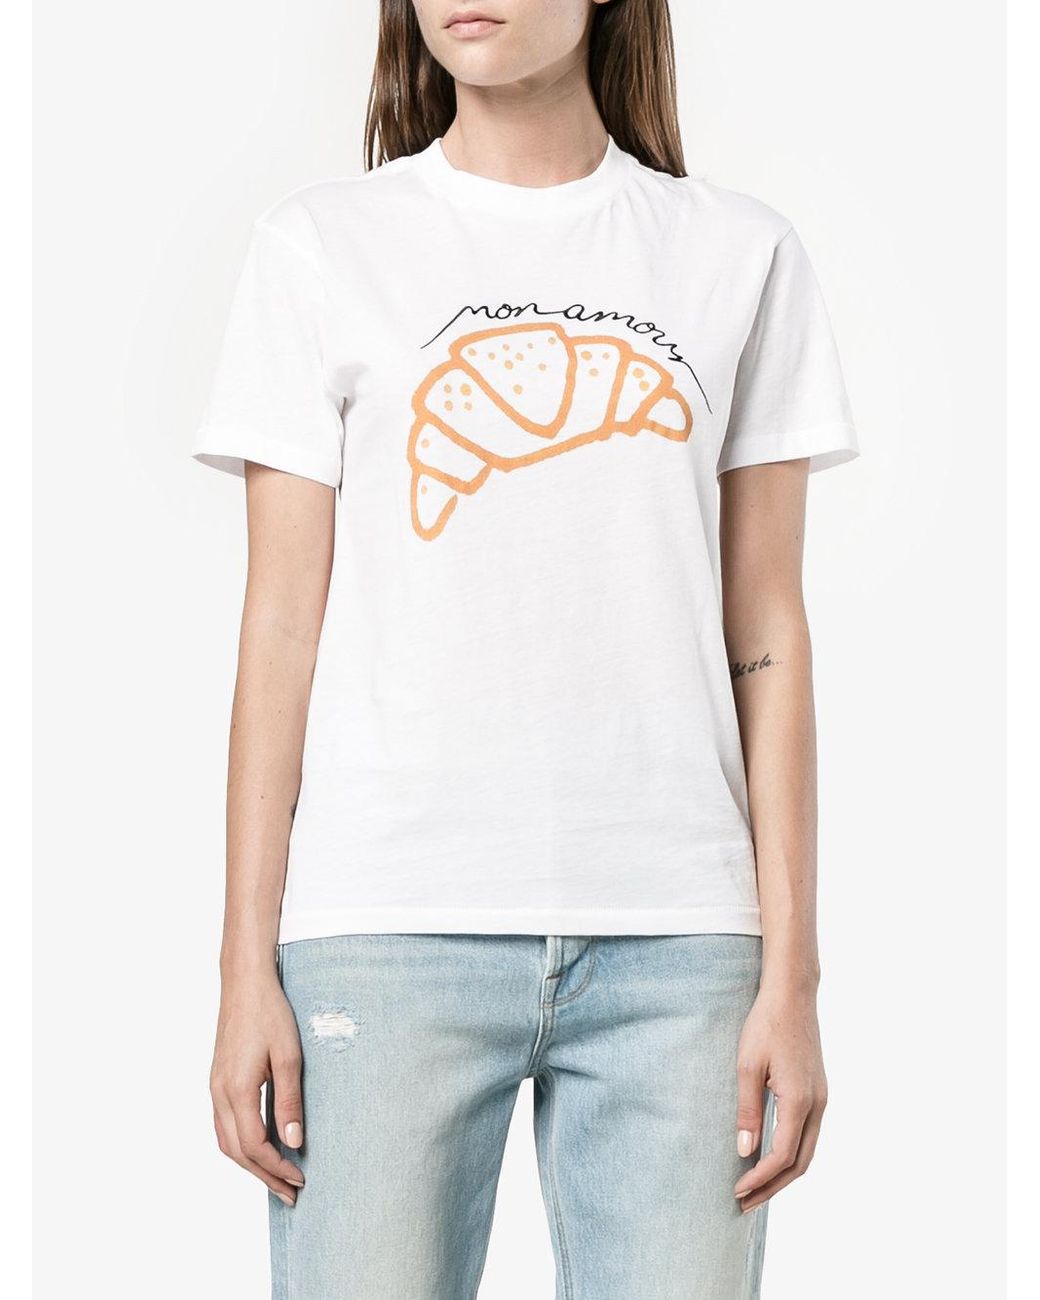 Ganni Moulin Croissant Print T-shirt in White | Lyst Australia